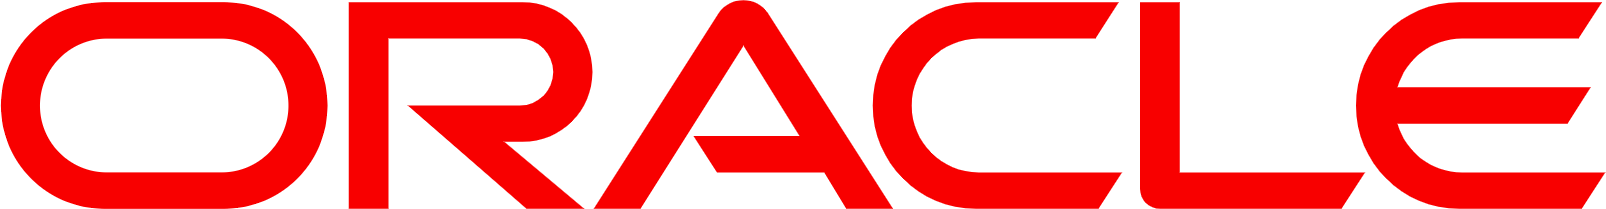 Oracle Corp Japan logo large (transparent PNG)